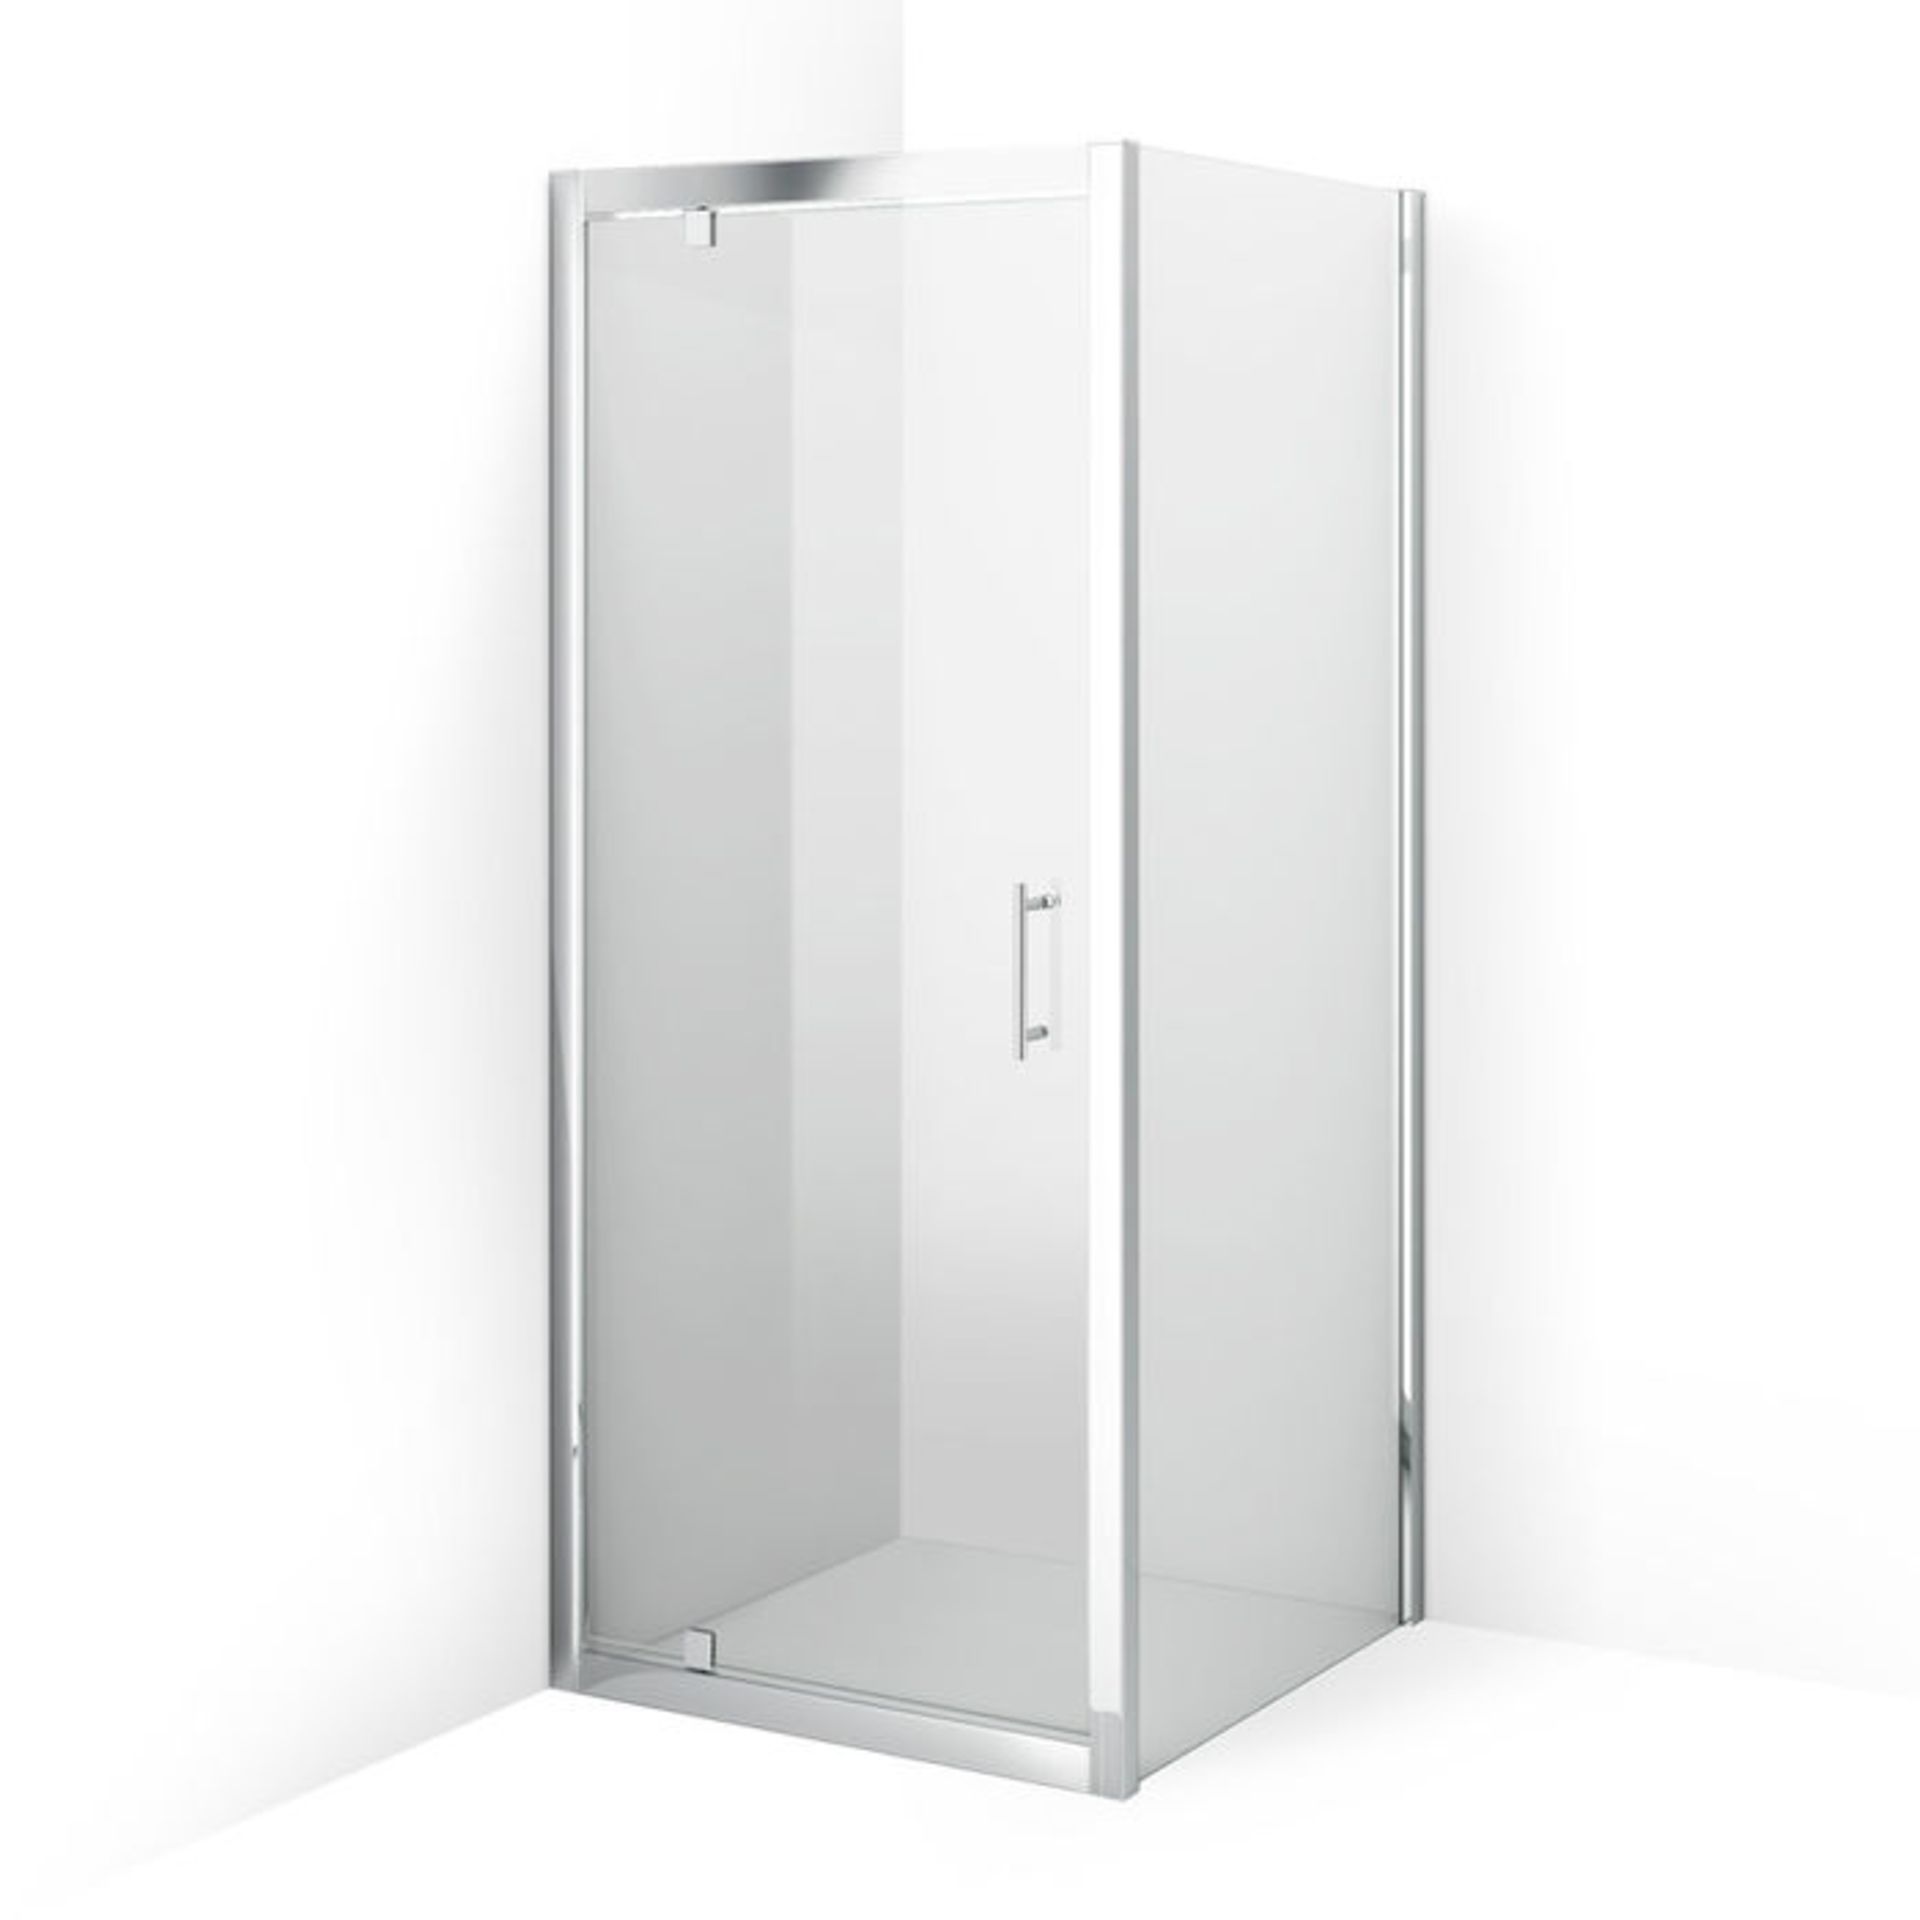 (CT101) 760x760mm - 6mm - Elements Pivot Door Shower Enclosure. RRP £309.99. 6mm Safety Glass - Bild 4 aus 4